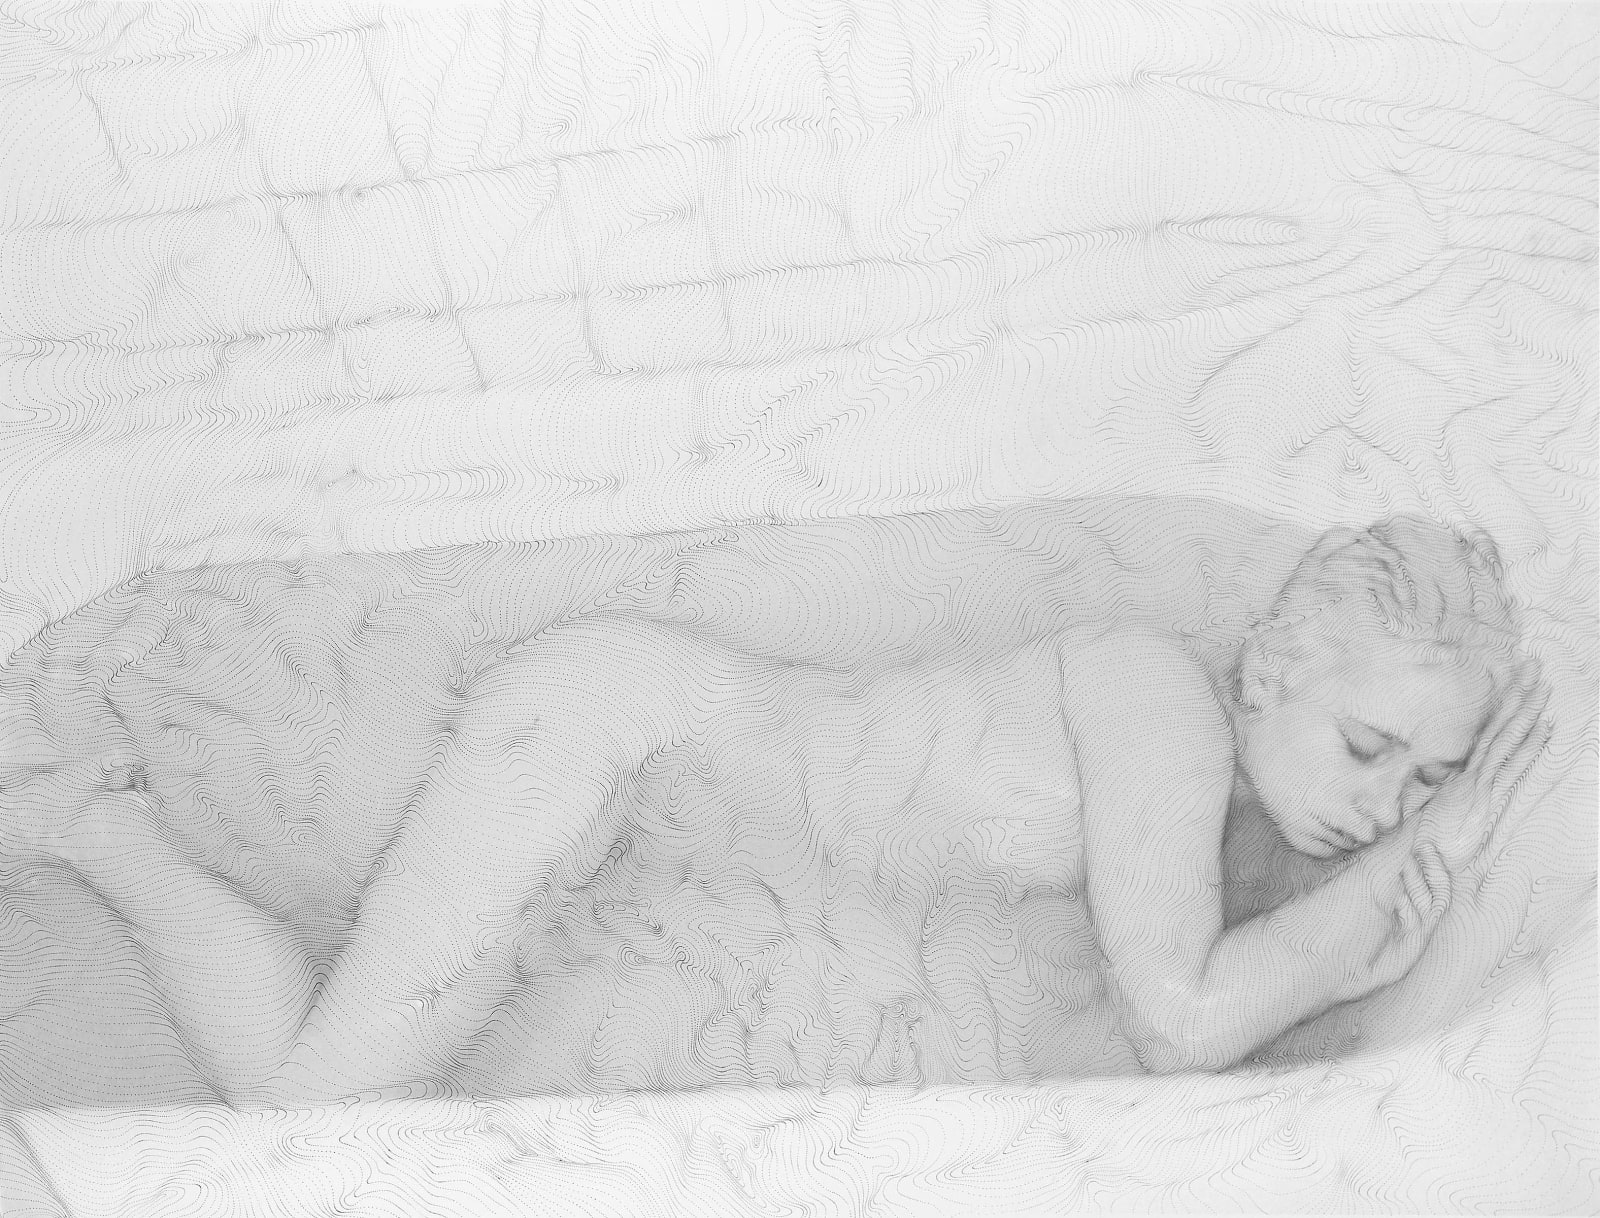 Sebastiaan Bremer Ave Maria 1 nude woman in bathtub gray dot image